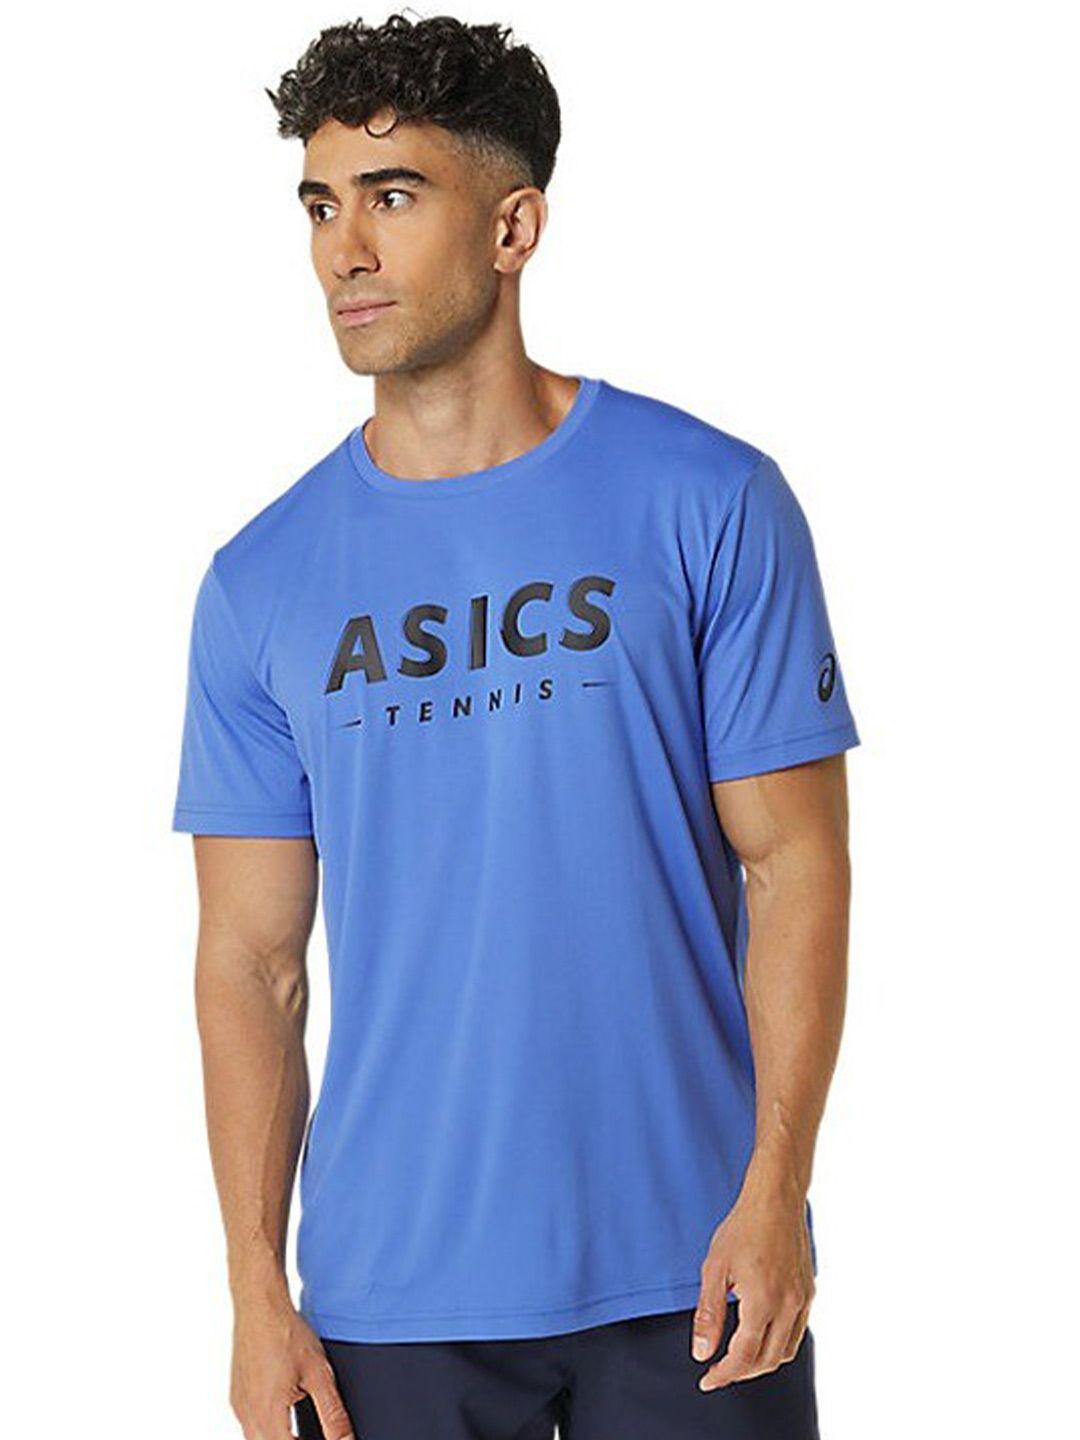 asics-court-tennis-graphic-printed-short-sleeves-t-shirt